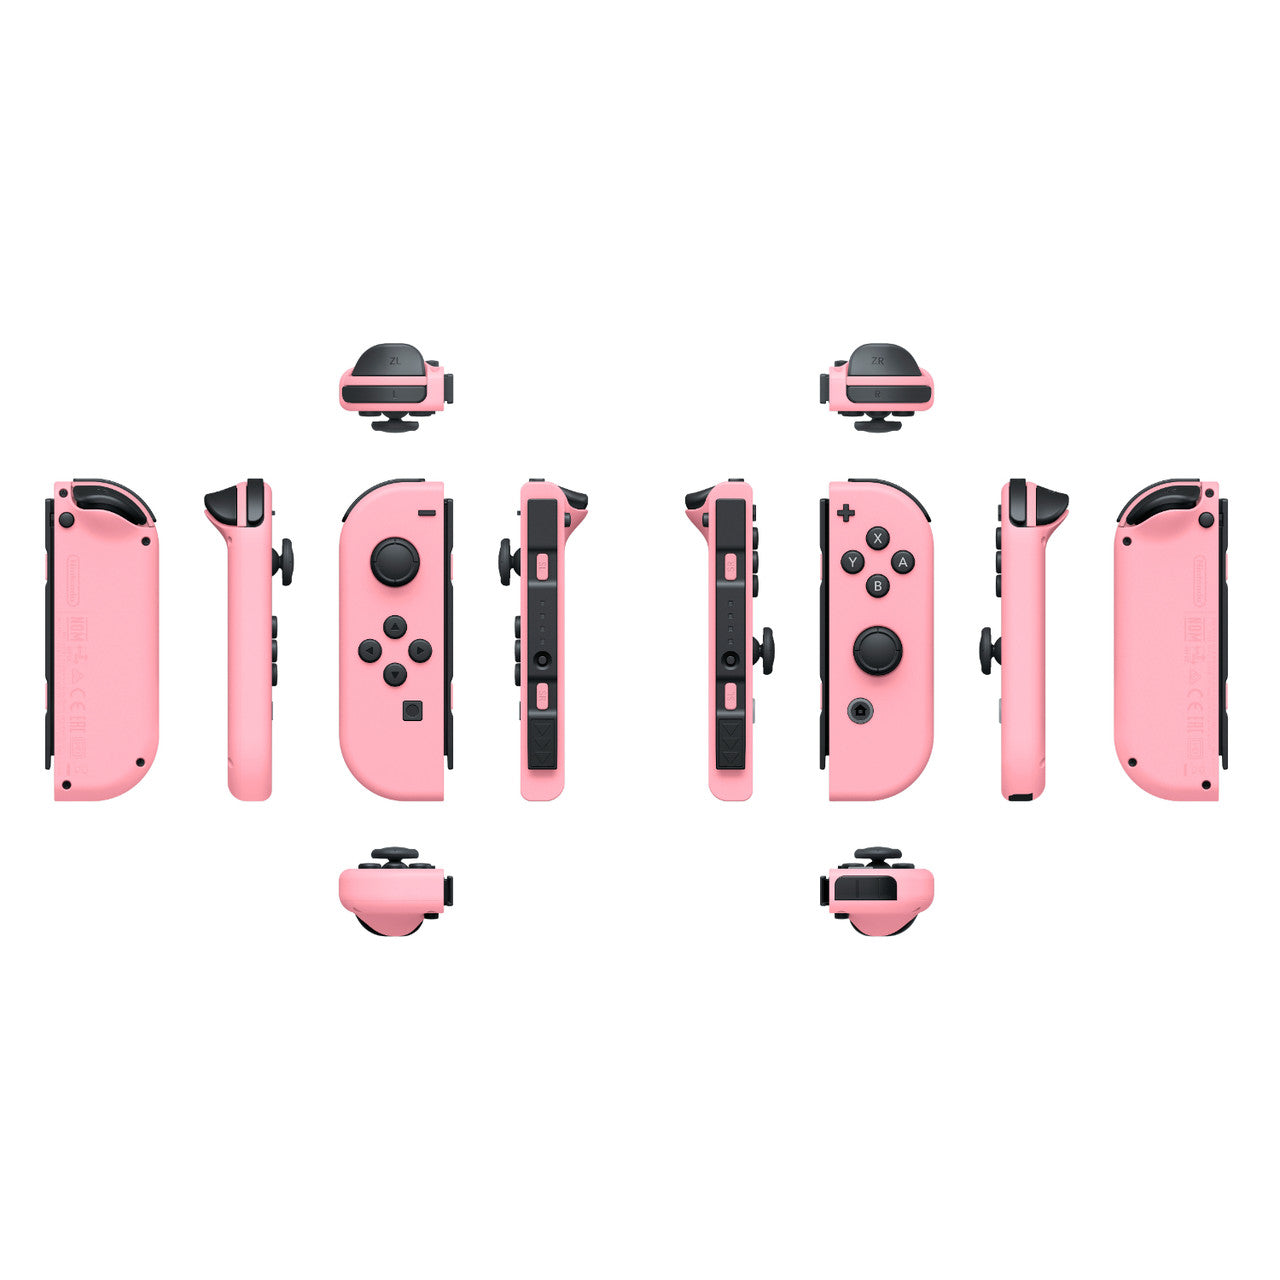 Nintendo - Switch Joy-Con (L/R) - Pastel Pink / Pastel Yellow